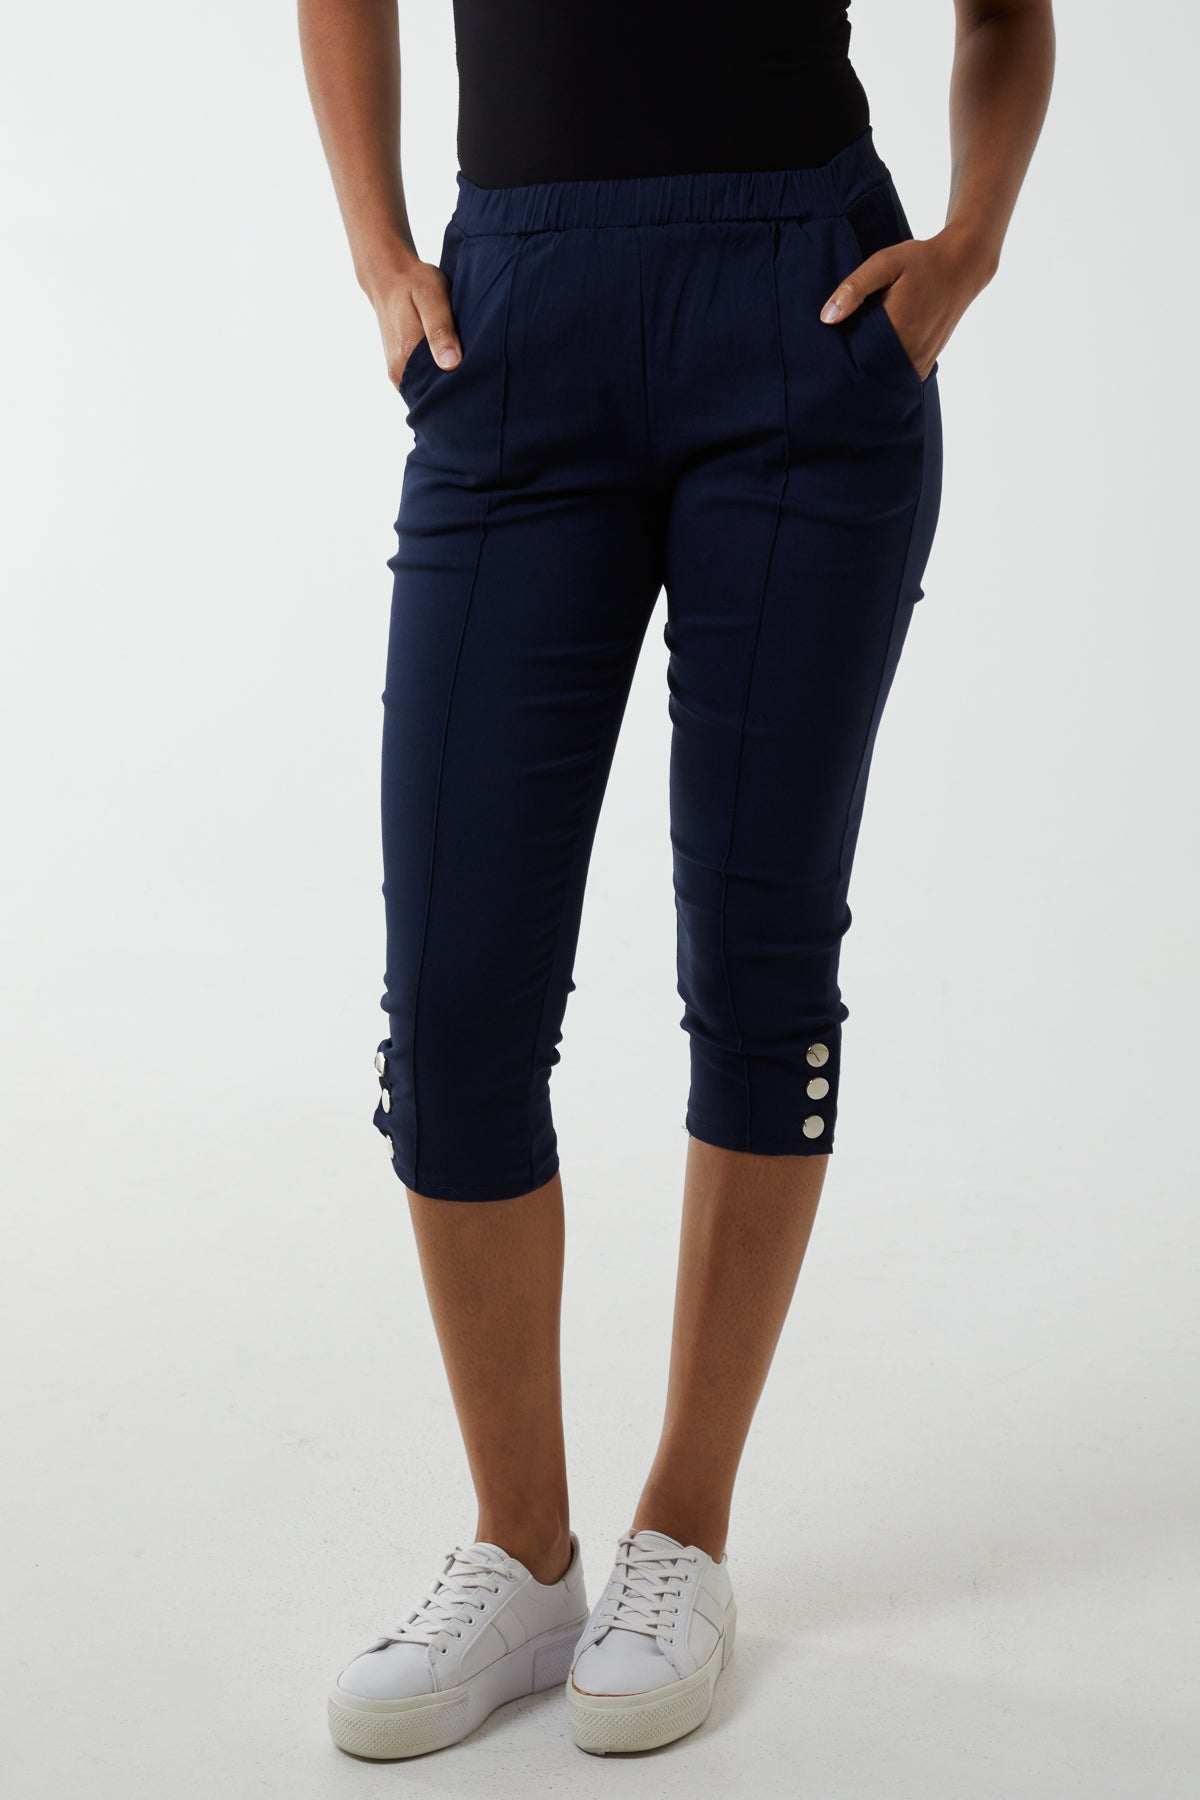 Leg Button Detail Elasticated Crop Trousers